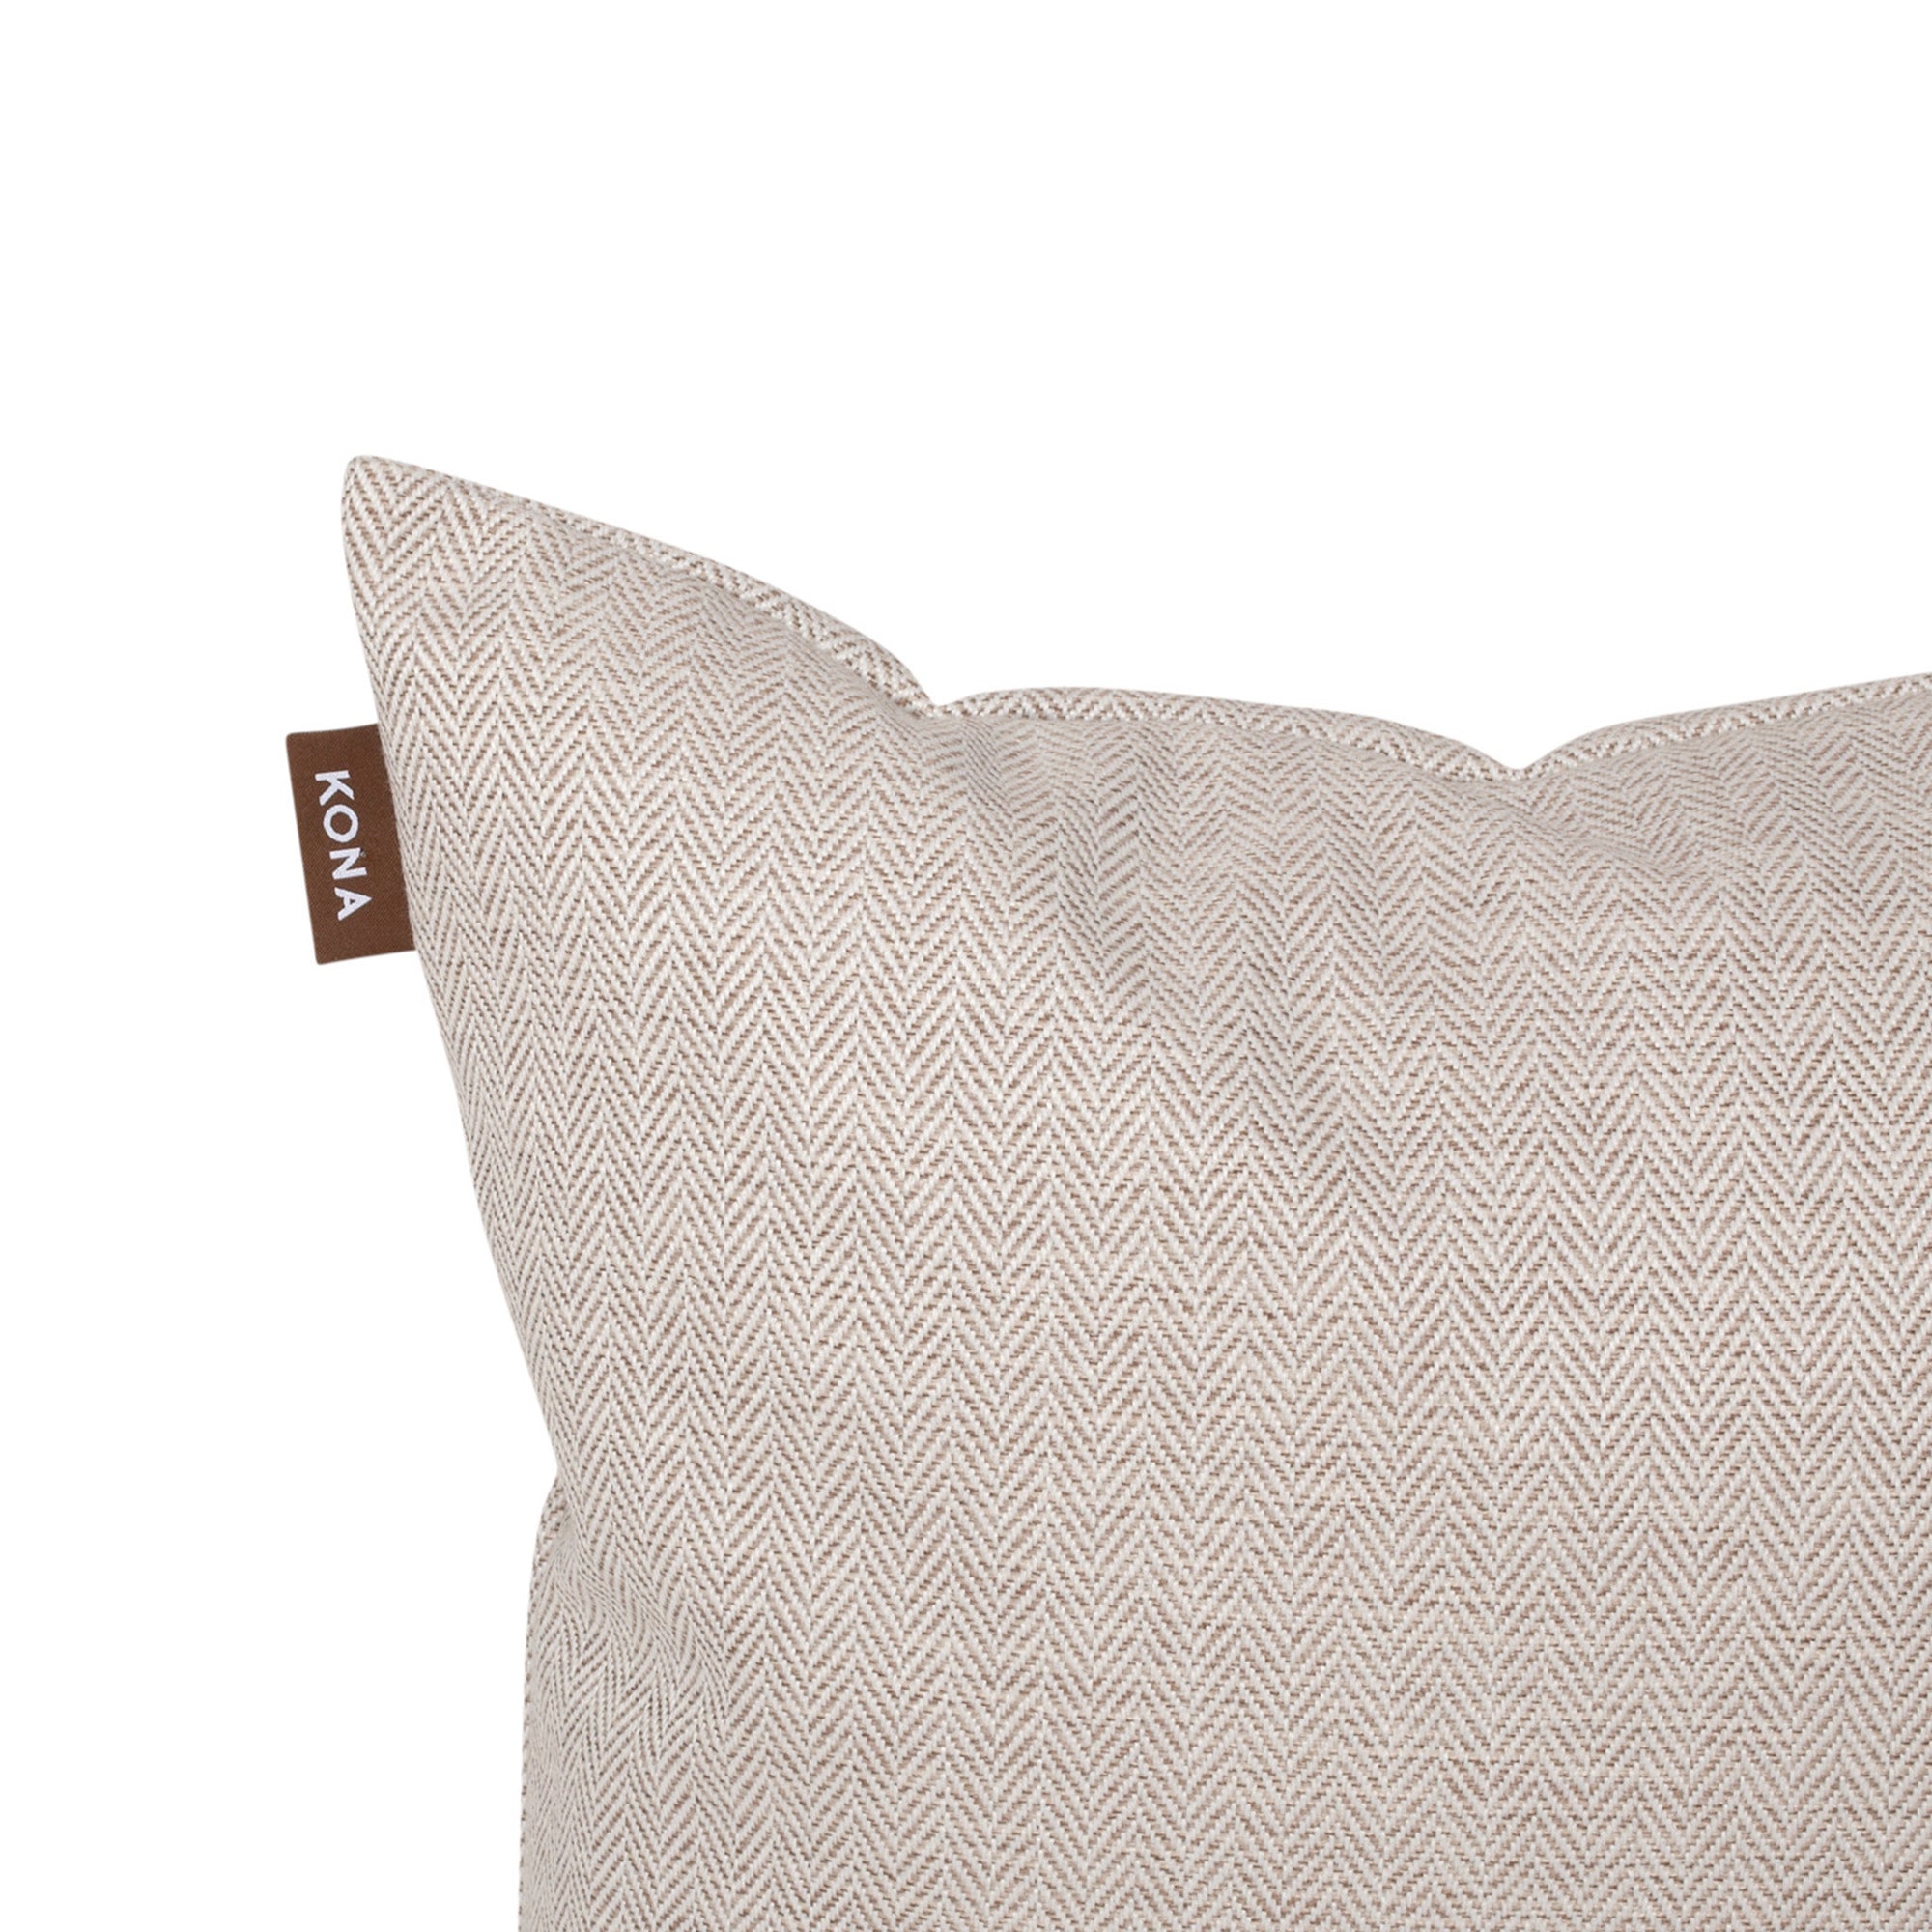 KONA CAVE® Decorative pillow covers, sophisticated cream herringbone fabric.